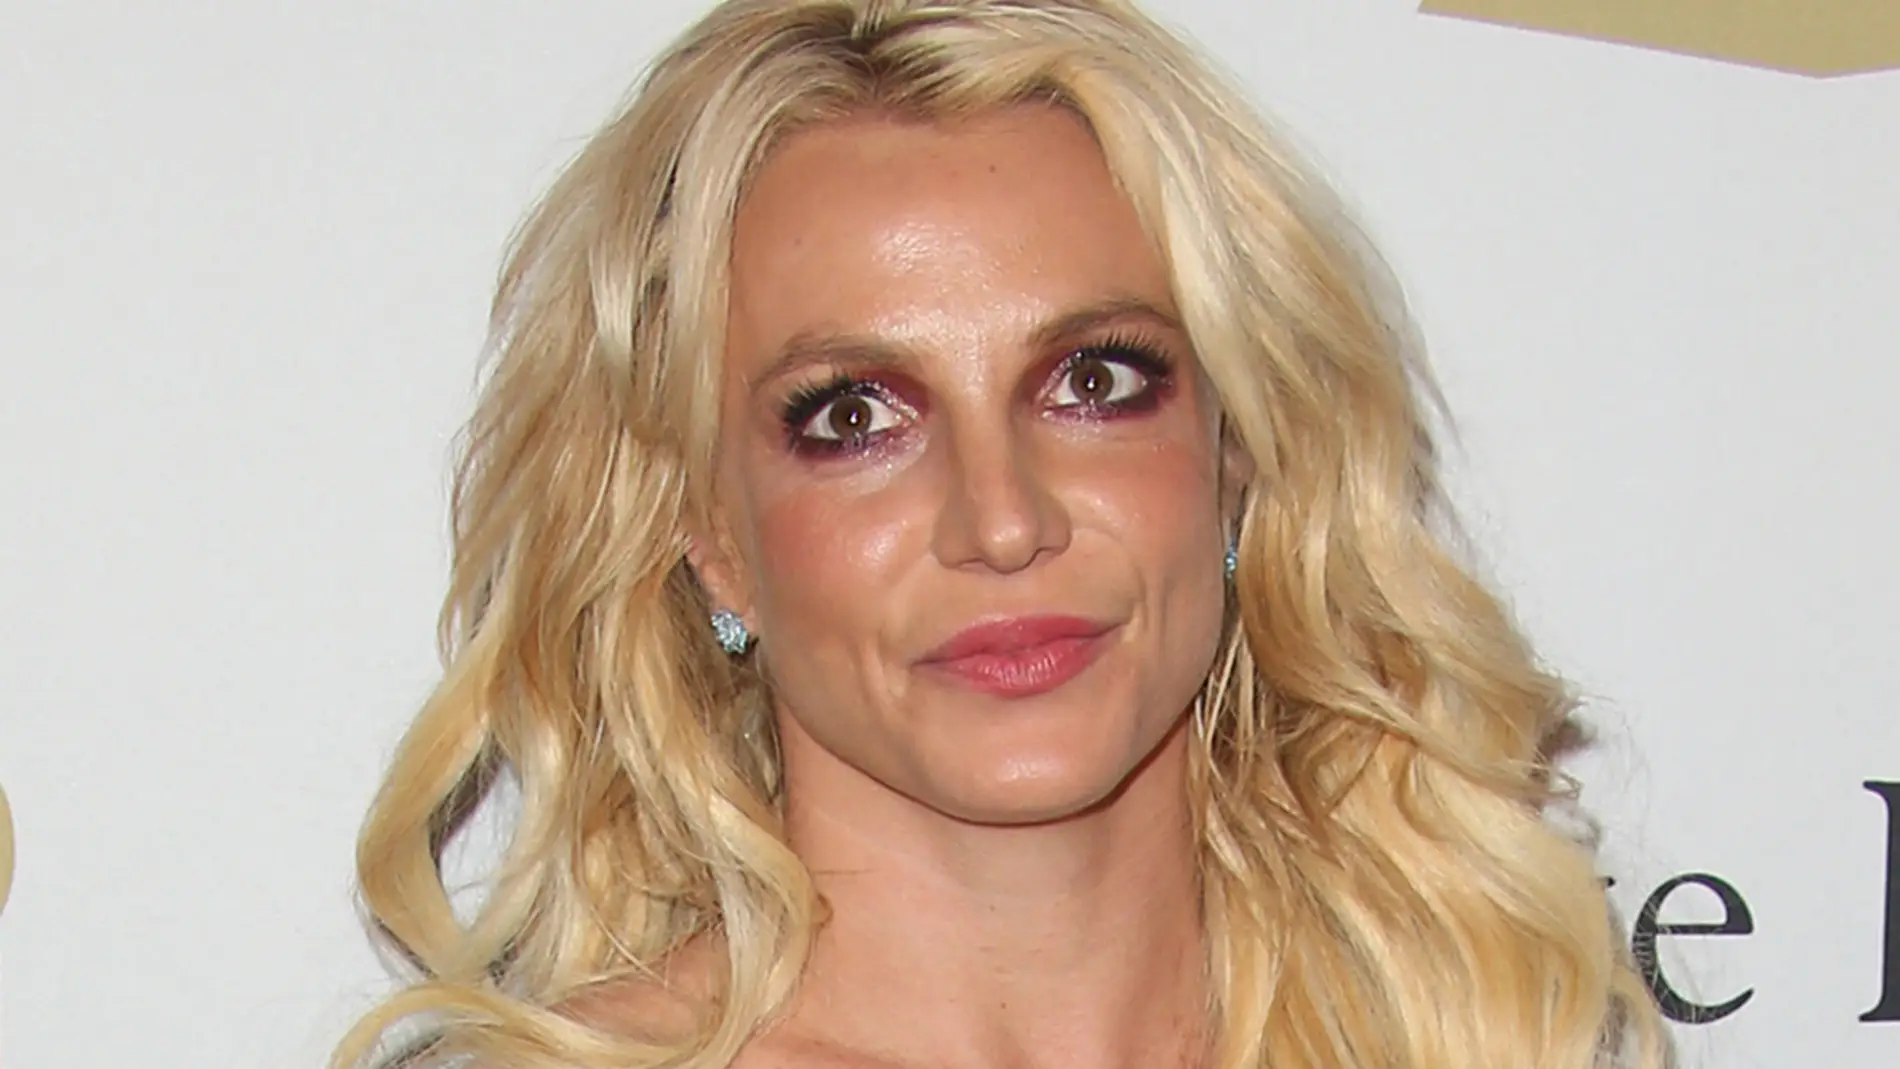 Britney Spears se disculpa en Instagram: &quot;Me sentía avergonzada&quot;